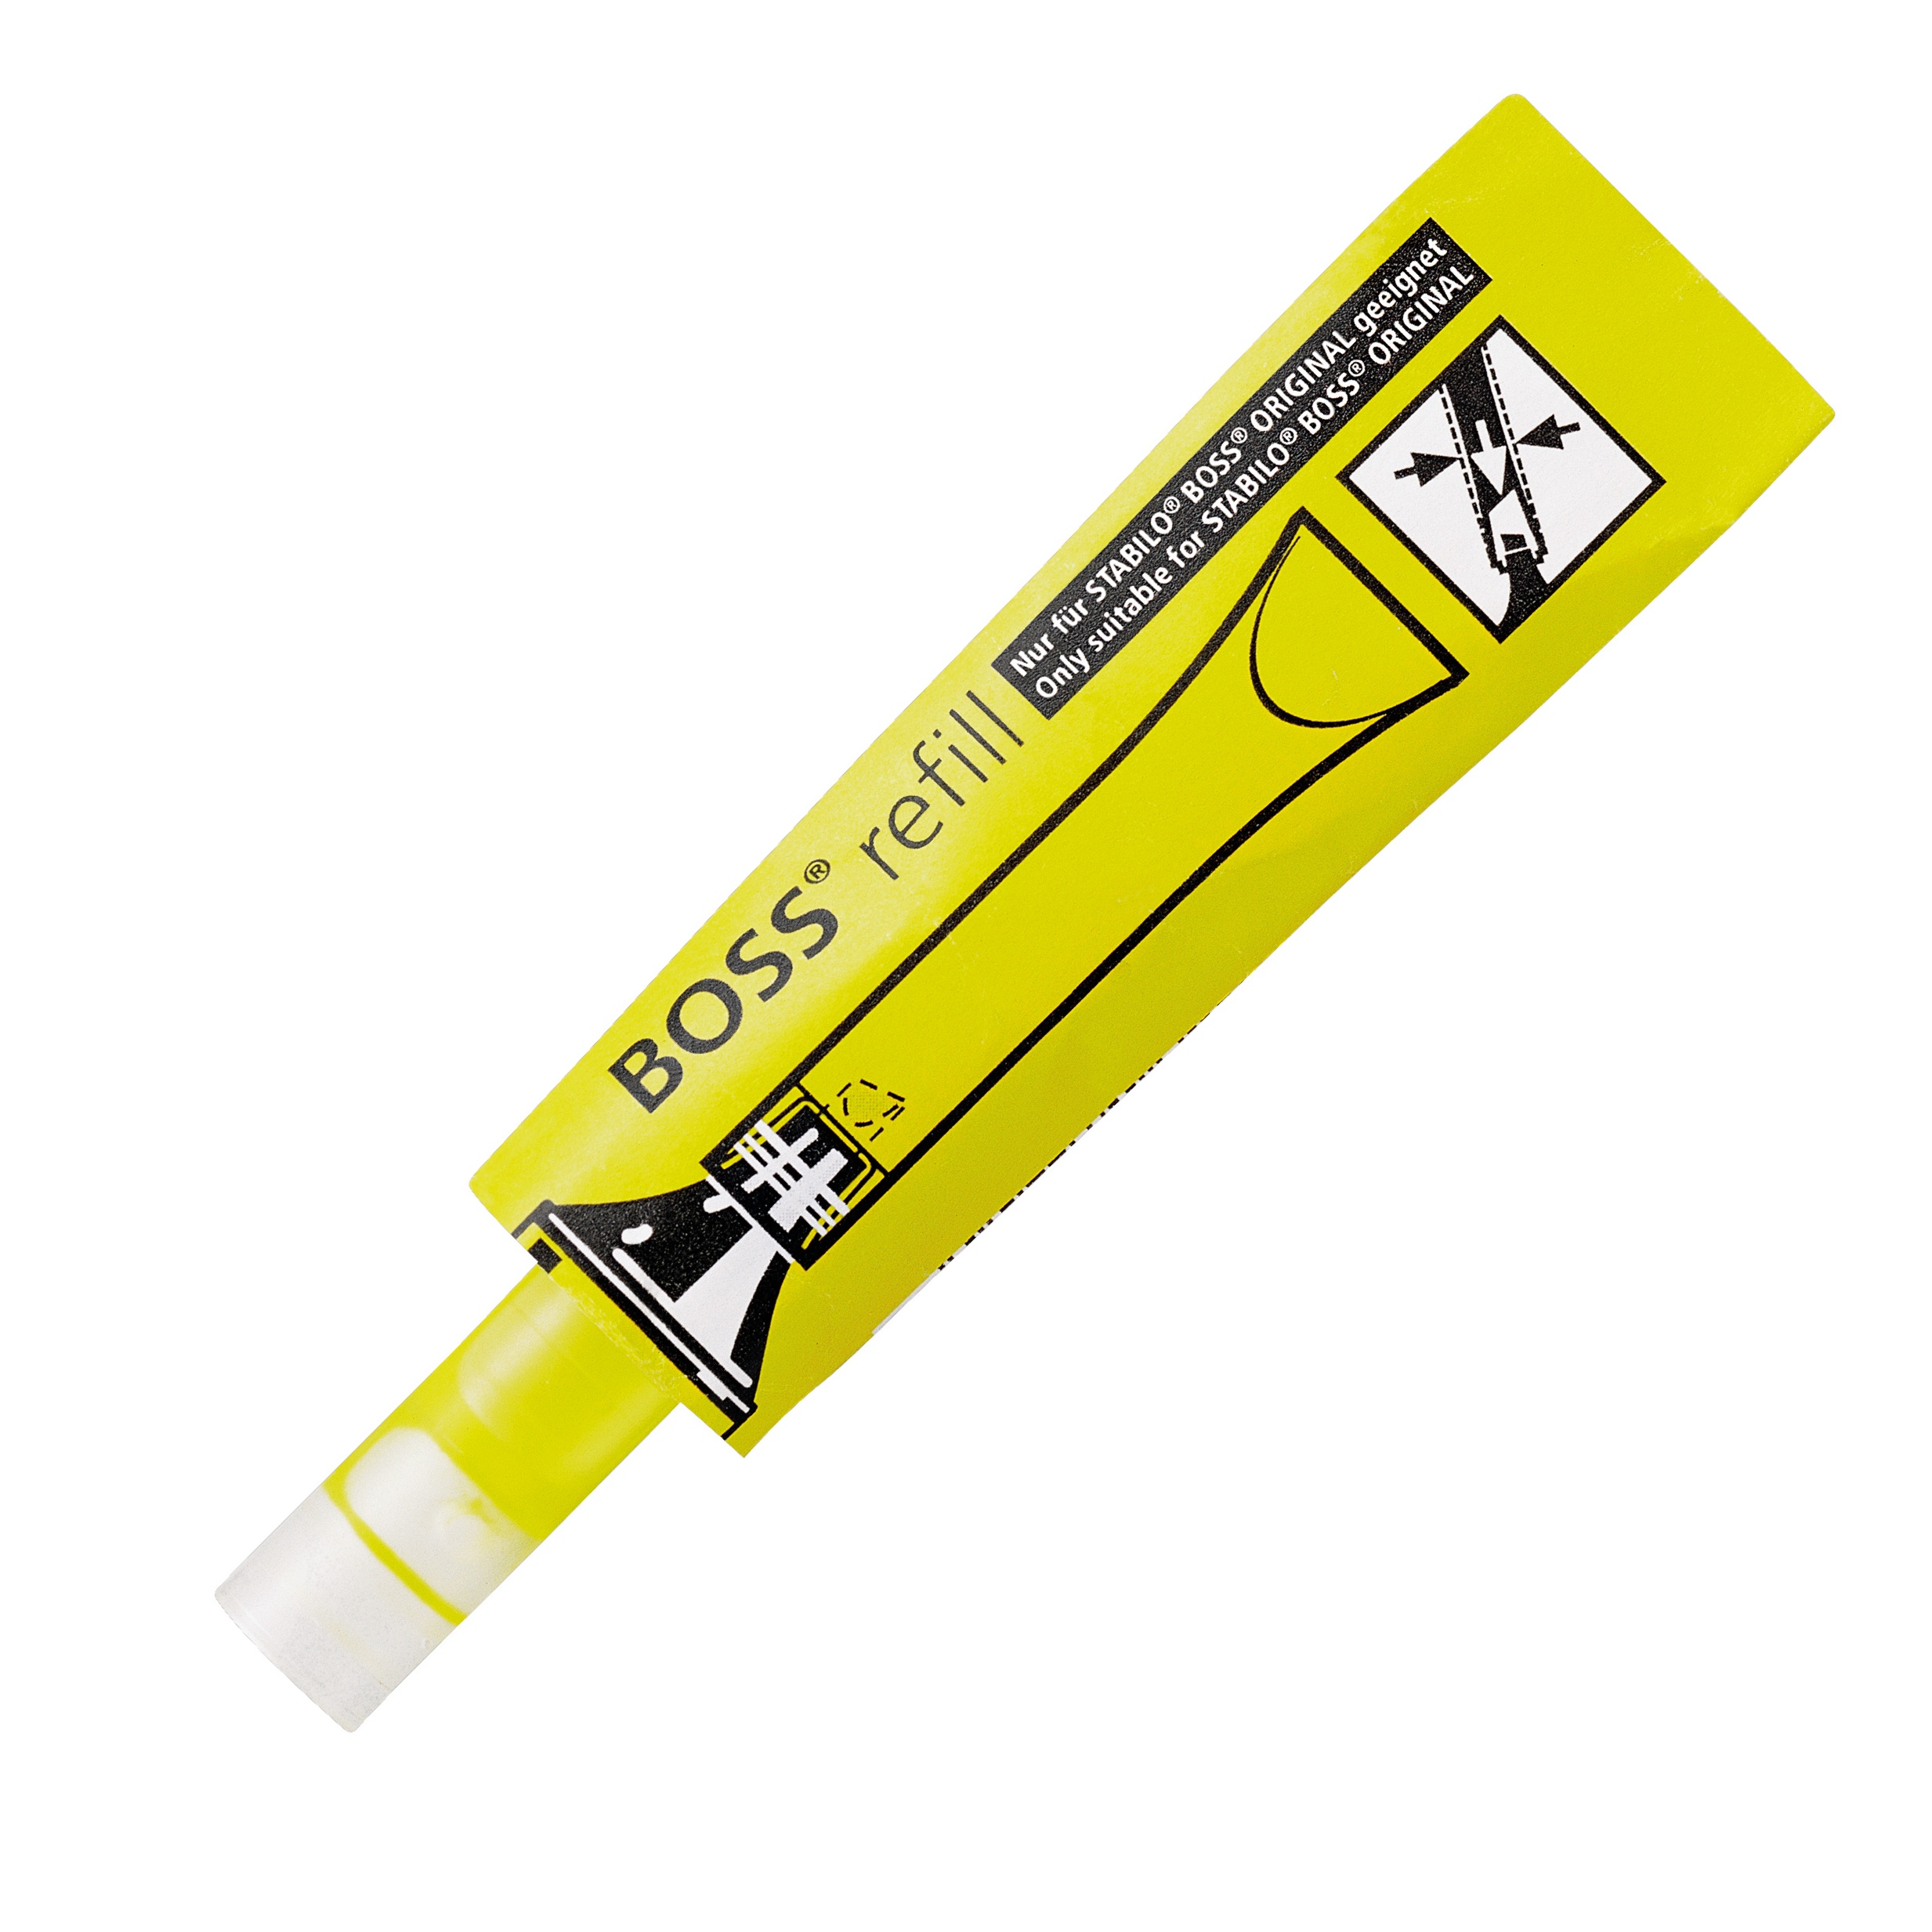 Stabilo Refills for BOSS Highlighter Pens in Yellow, Orange, Green & Pink